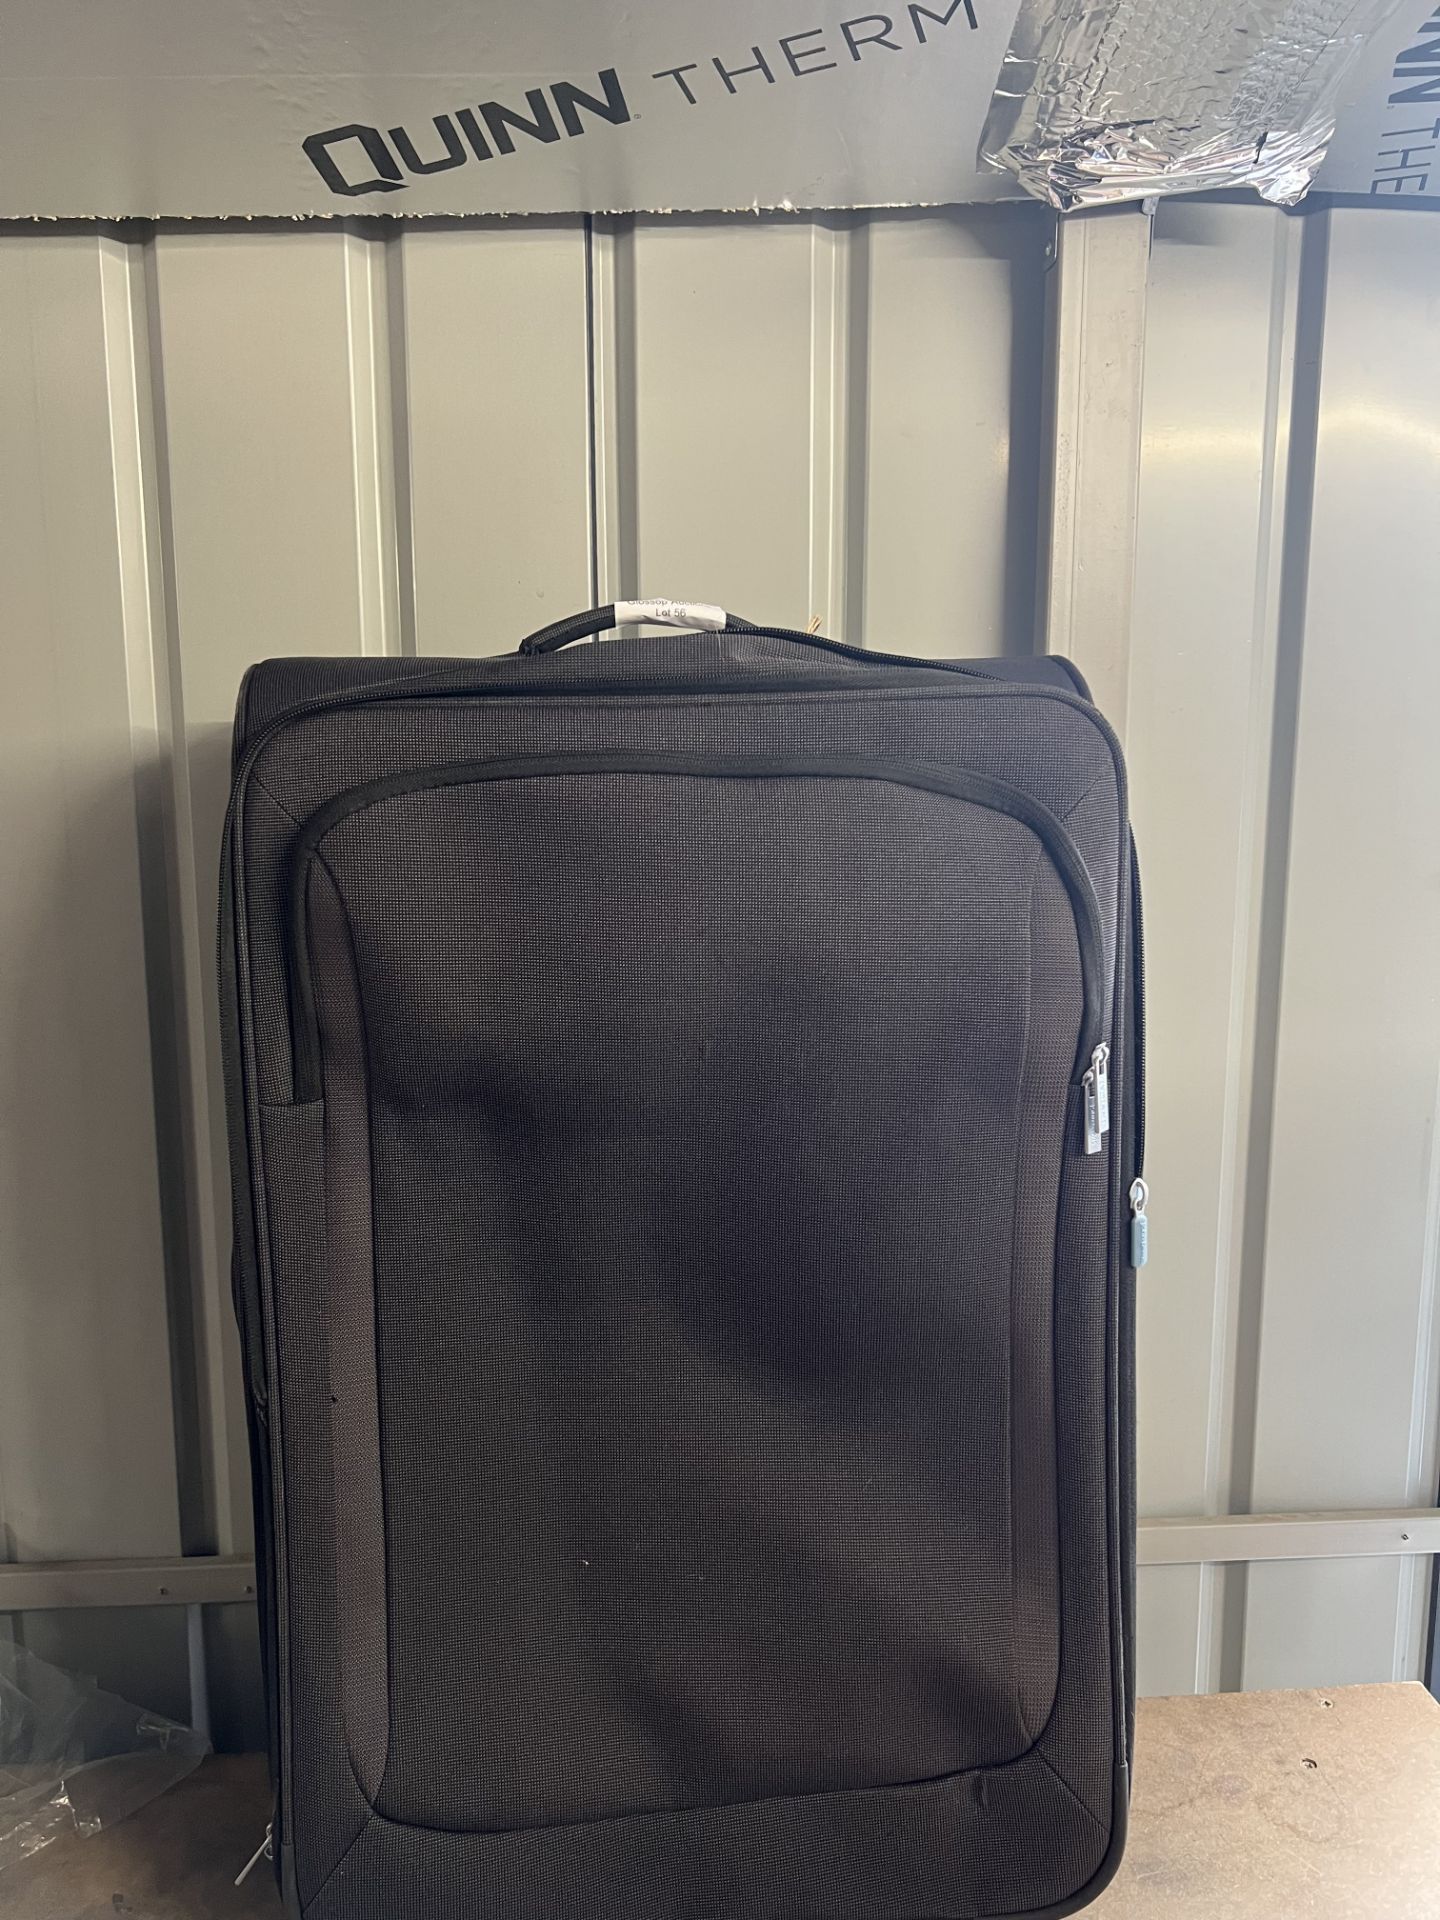 John Lewis Medium Size Suitcase. RRP £149.99 - GRADE U